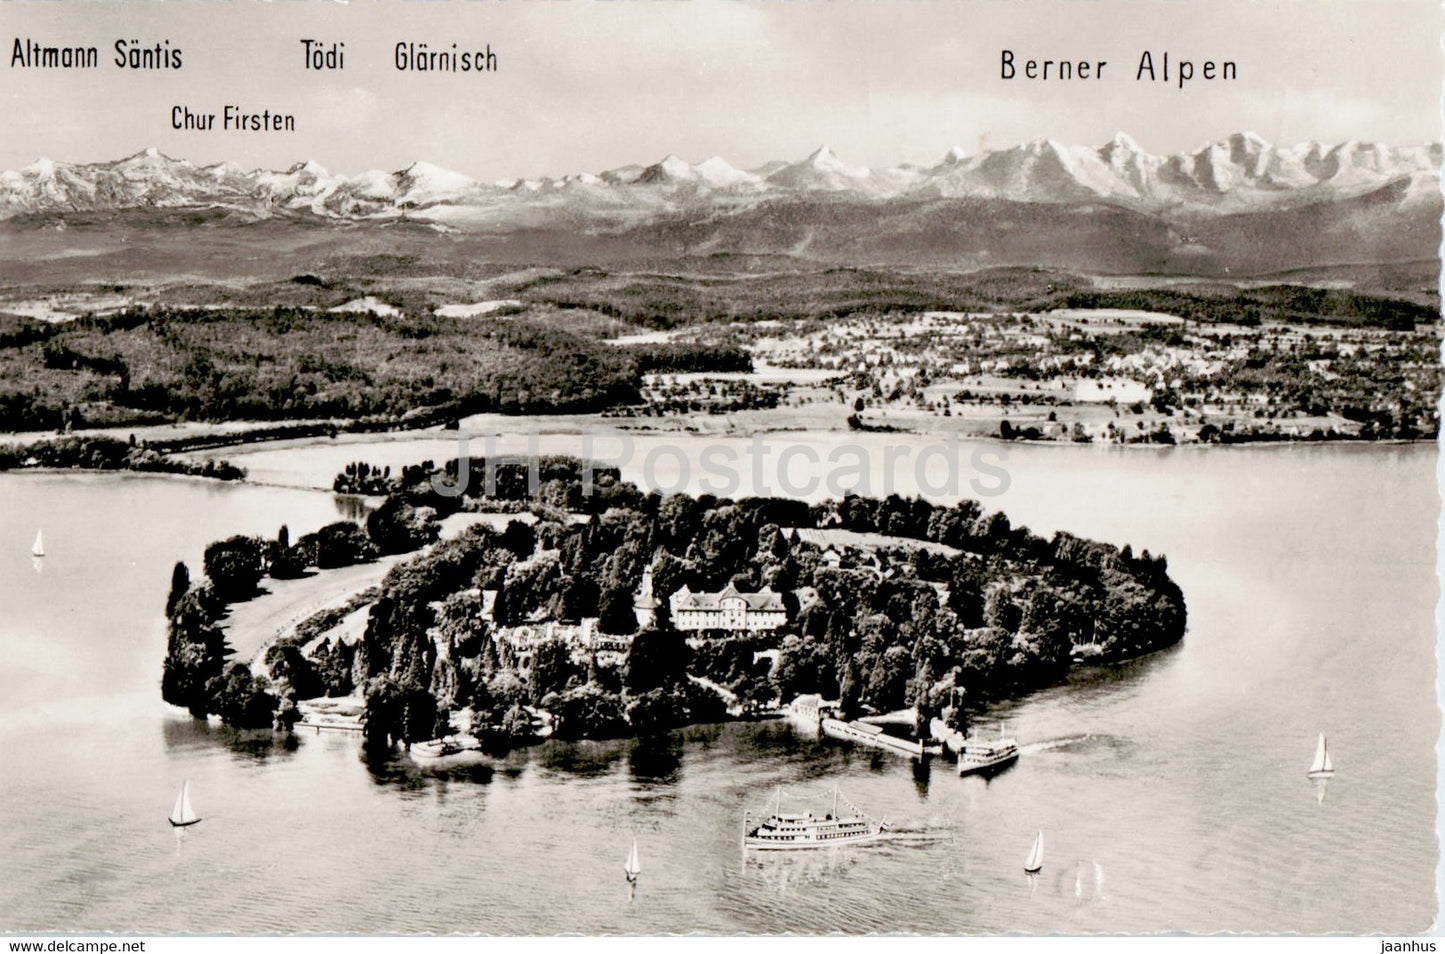 Insel Mainau im Bodensee - 1960 - Germany - used - JH Postcards